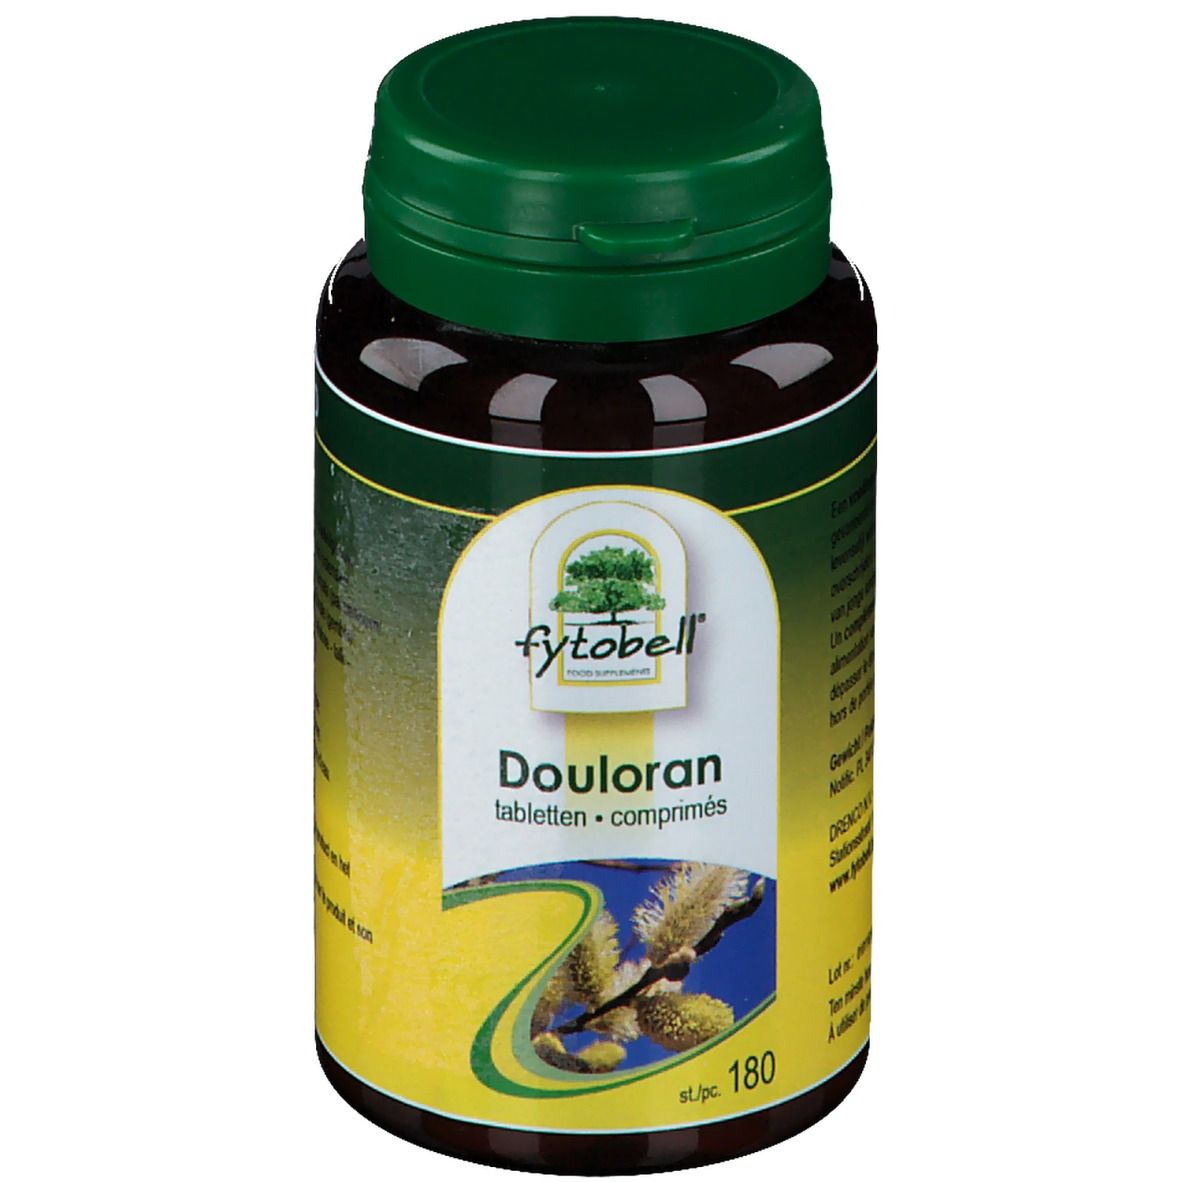 Fytobell® Douloran